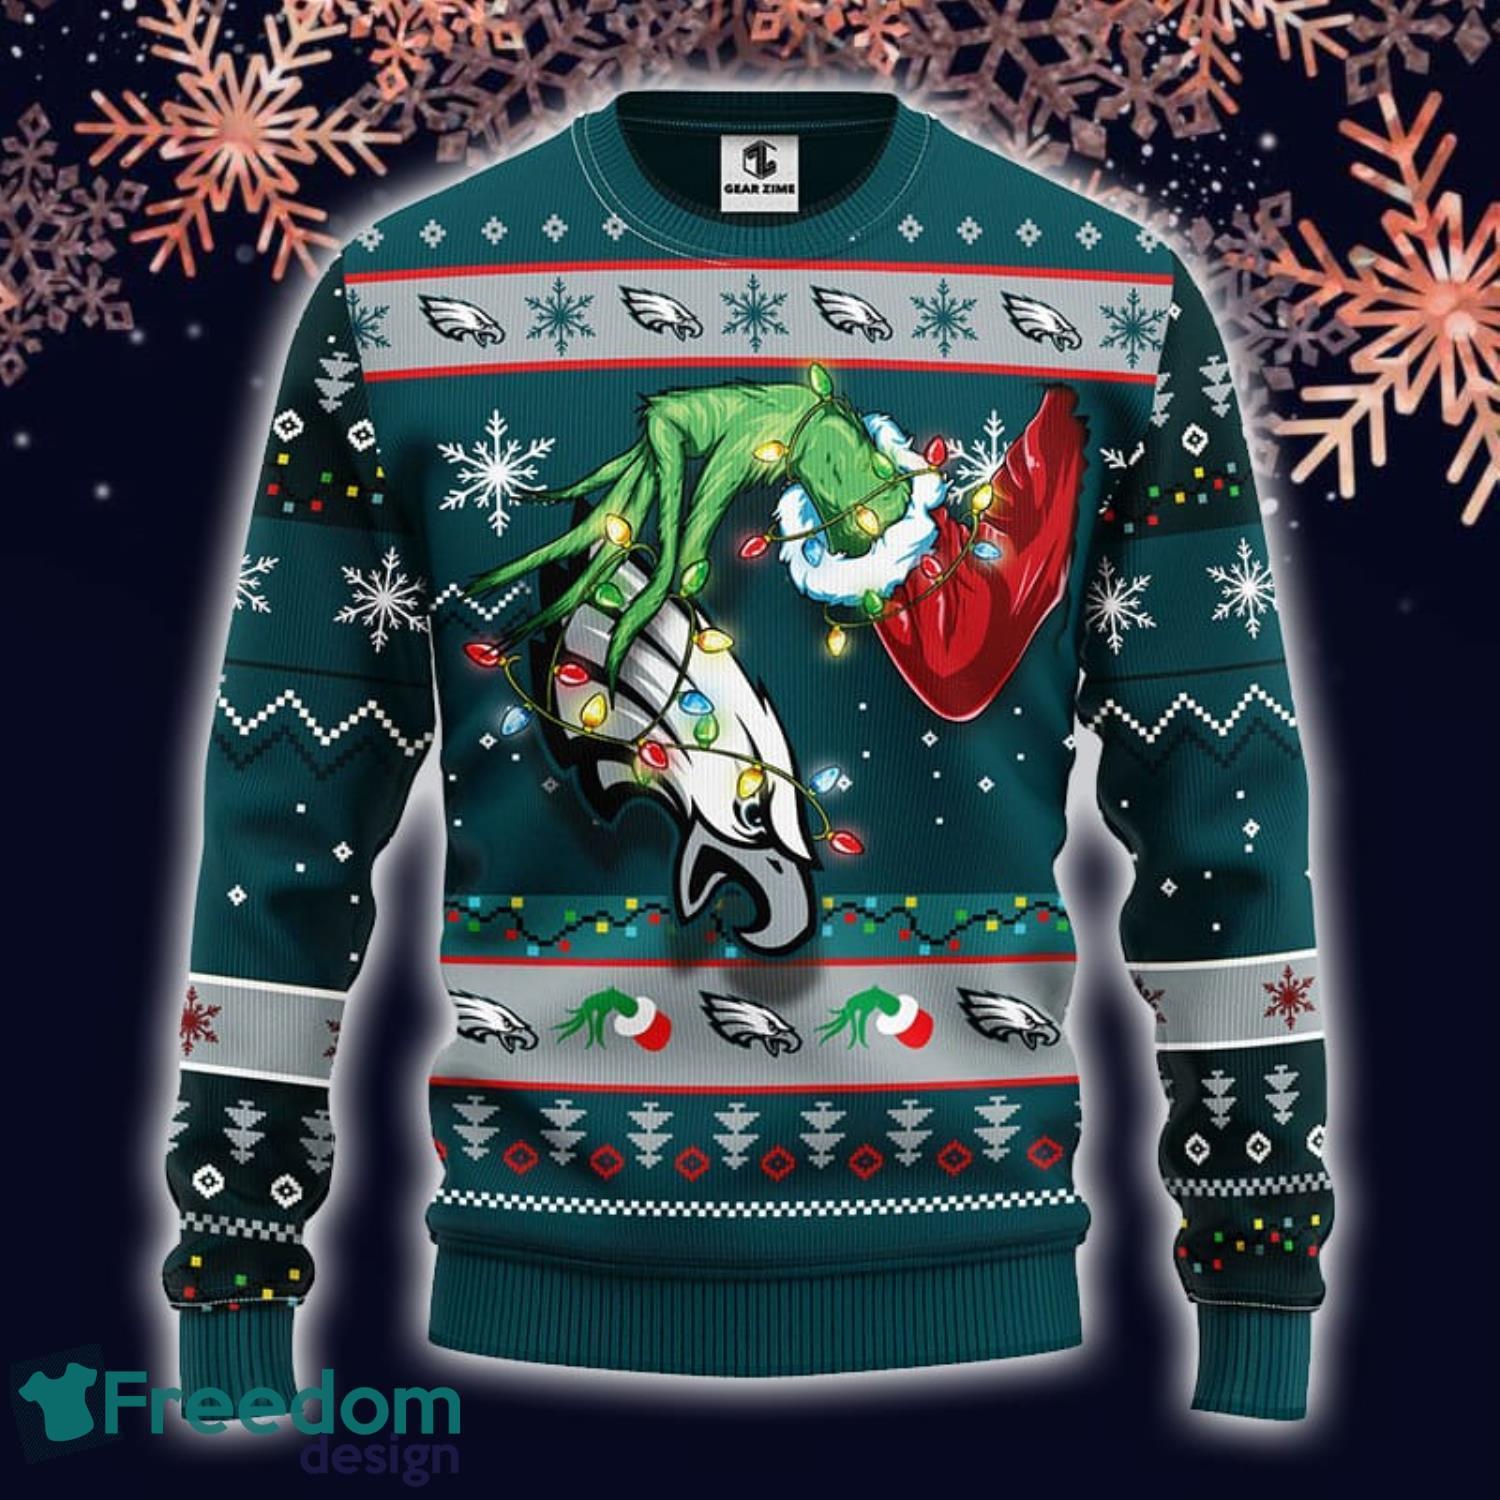 Las Vegas Raiders Eyelash Ugly Ideas Funny Ugly Christmas Sweater -  Freedomdesign